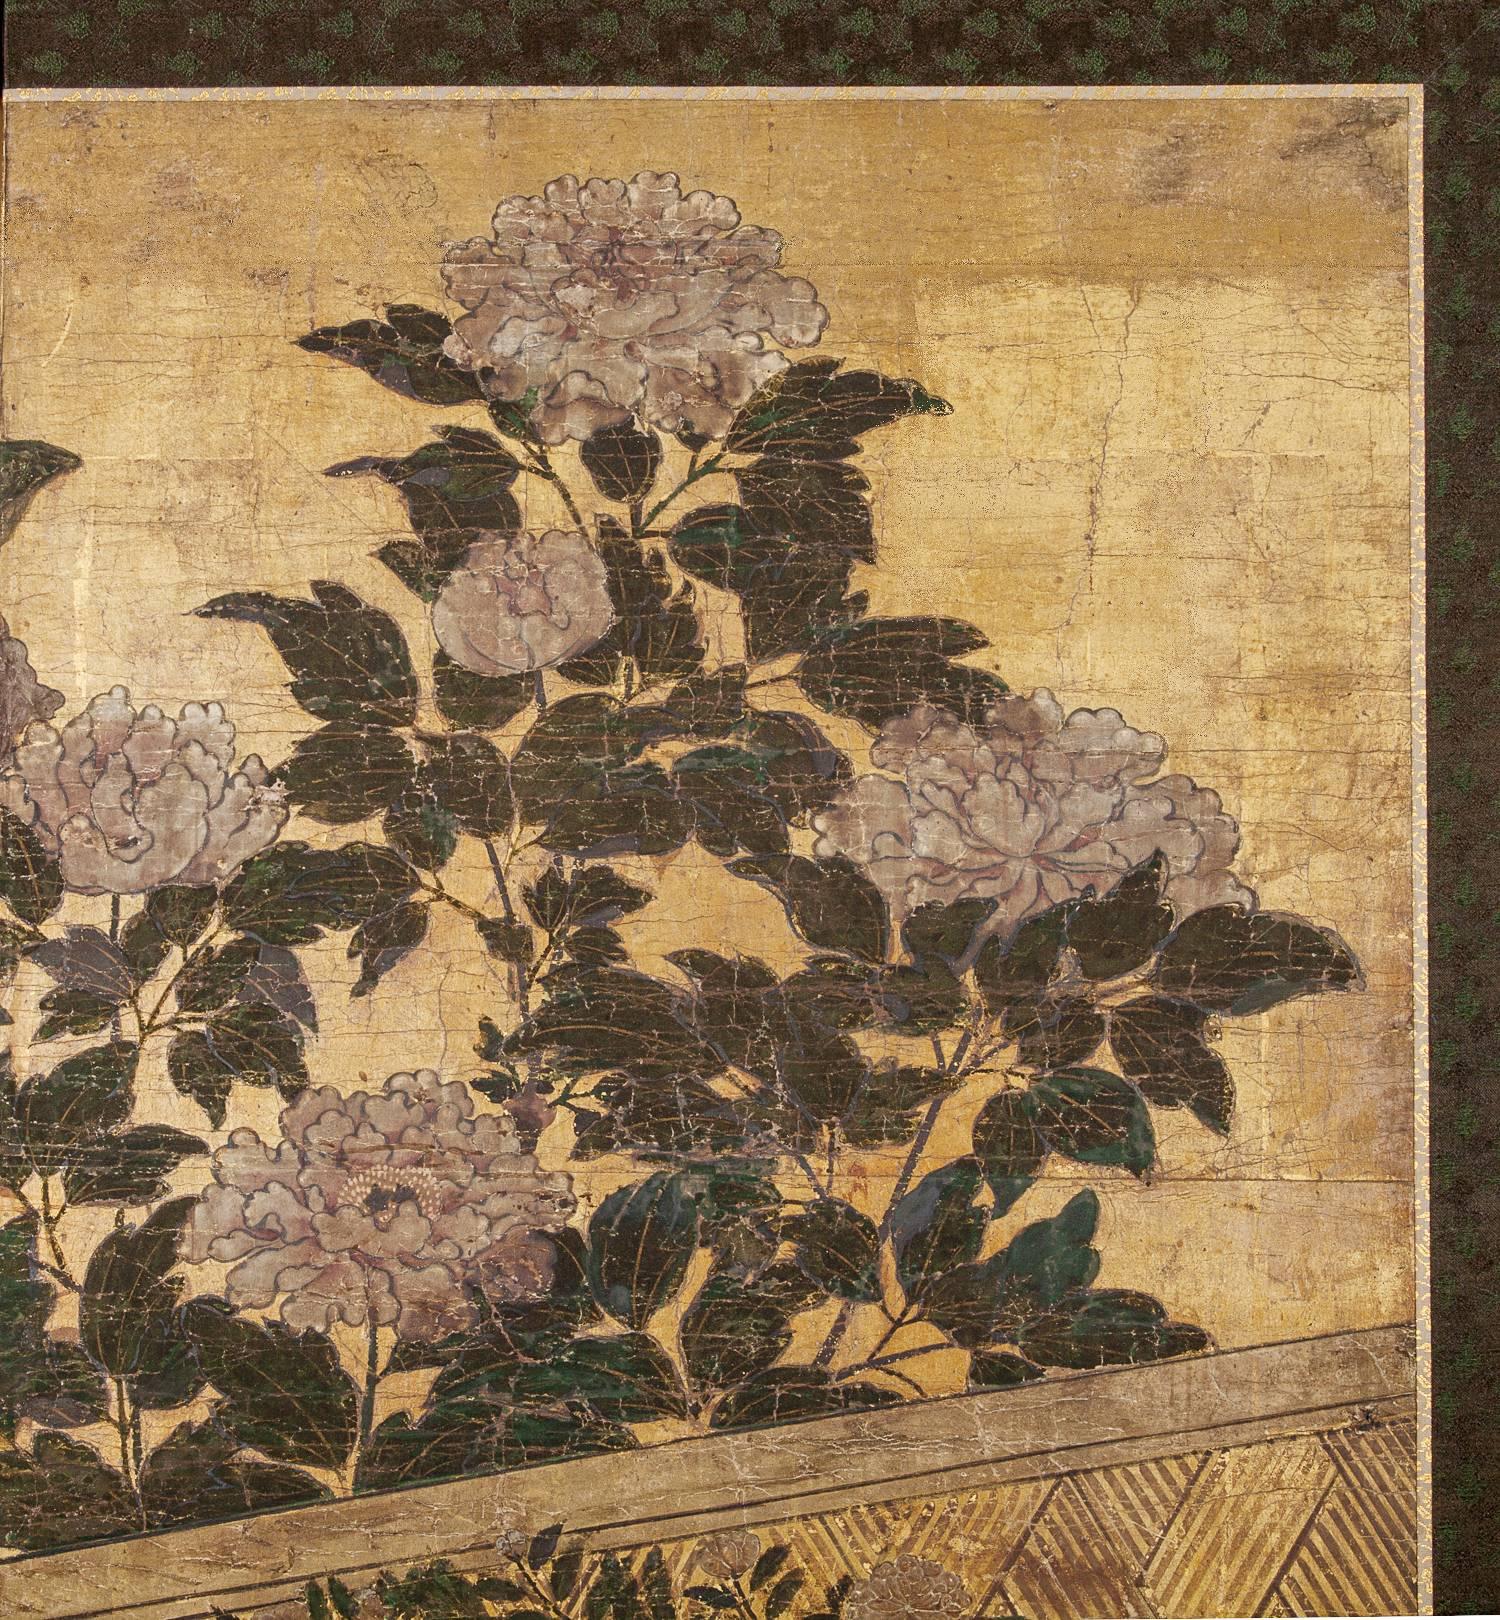 Edo Japanese Two Panel Screen: Summer Flowers in a Garden Setting